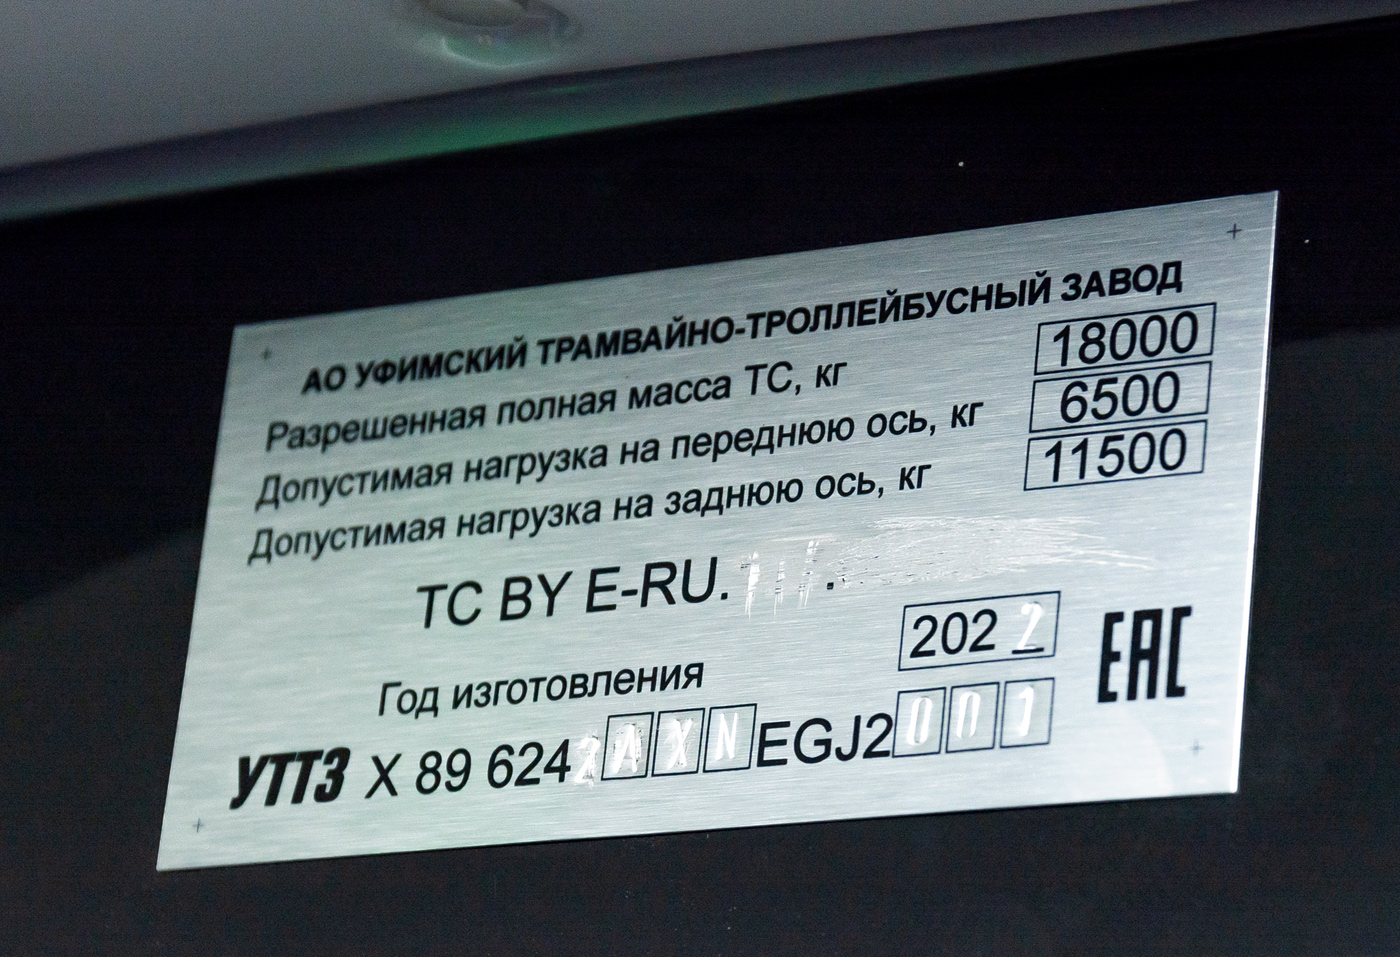 Ufa, UTTZ-6242 Nr 6242; Ufa — Nameplates; Ufa — New BTZ trolleybuses